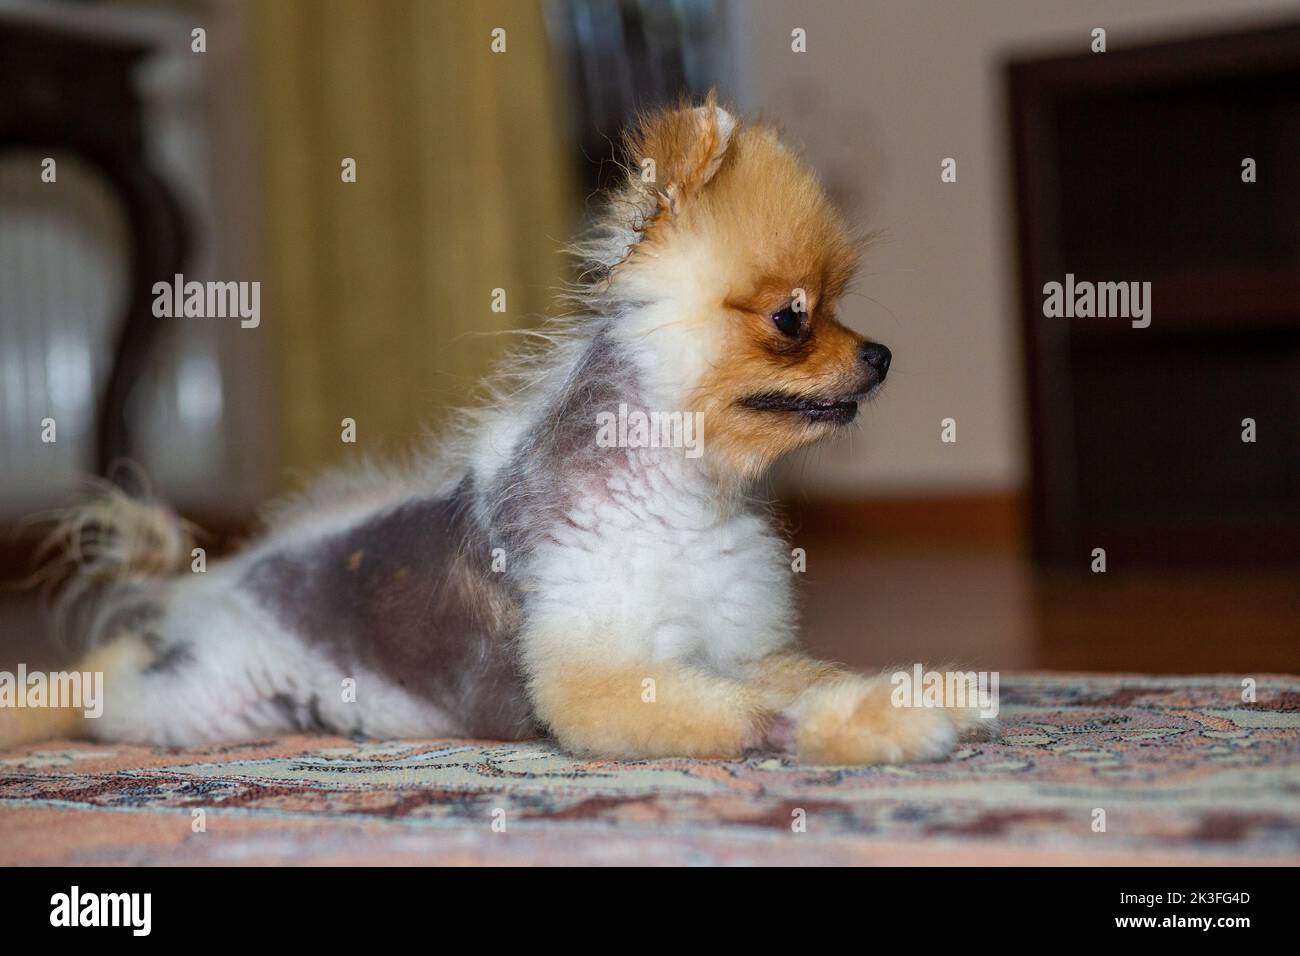 German spitz pomeranian dog sitting. Black-skinned dog with hair loss. Stock Photo